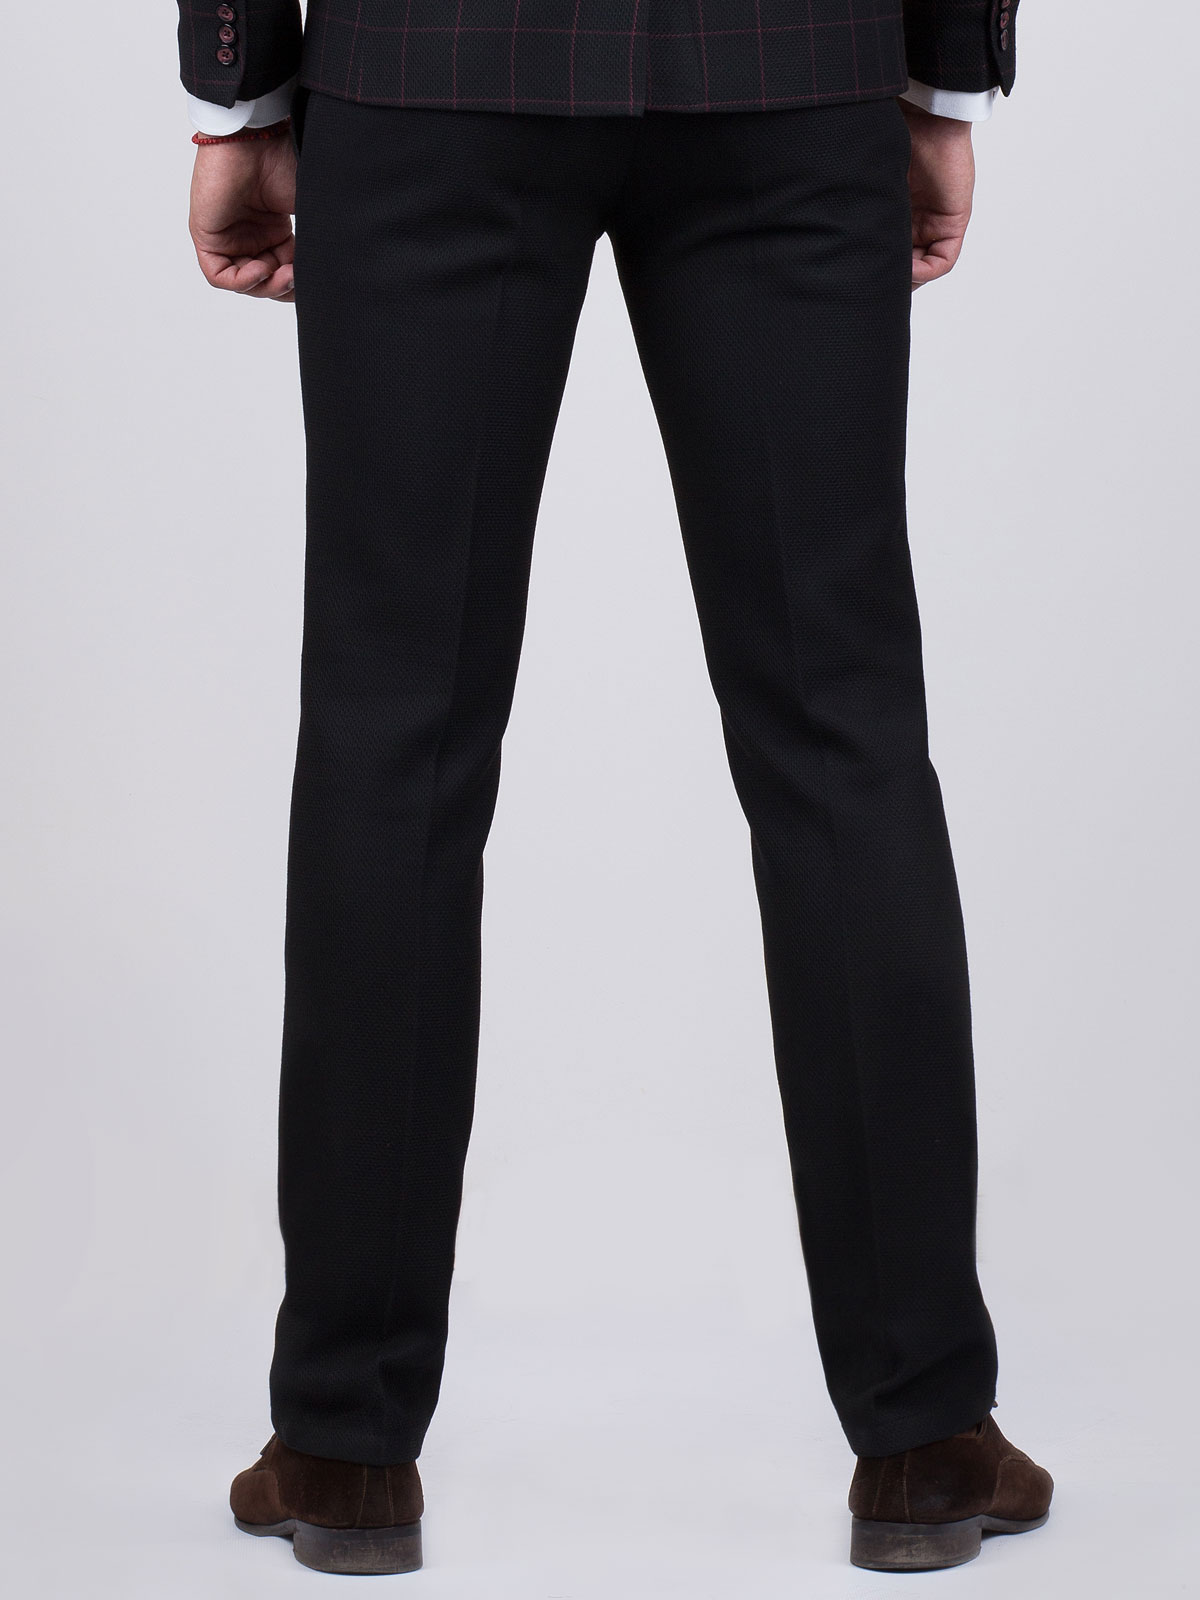 Black pants classic grain fabric - 60229 € 19.12 img2